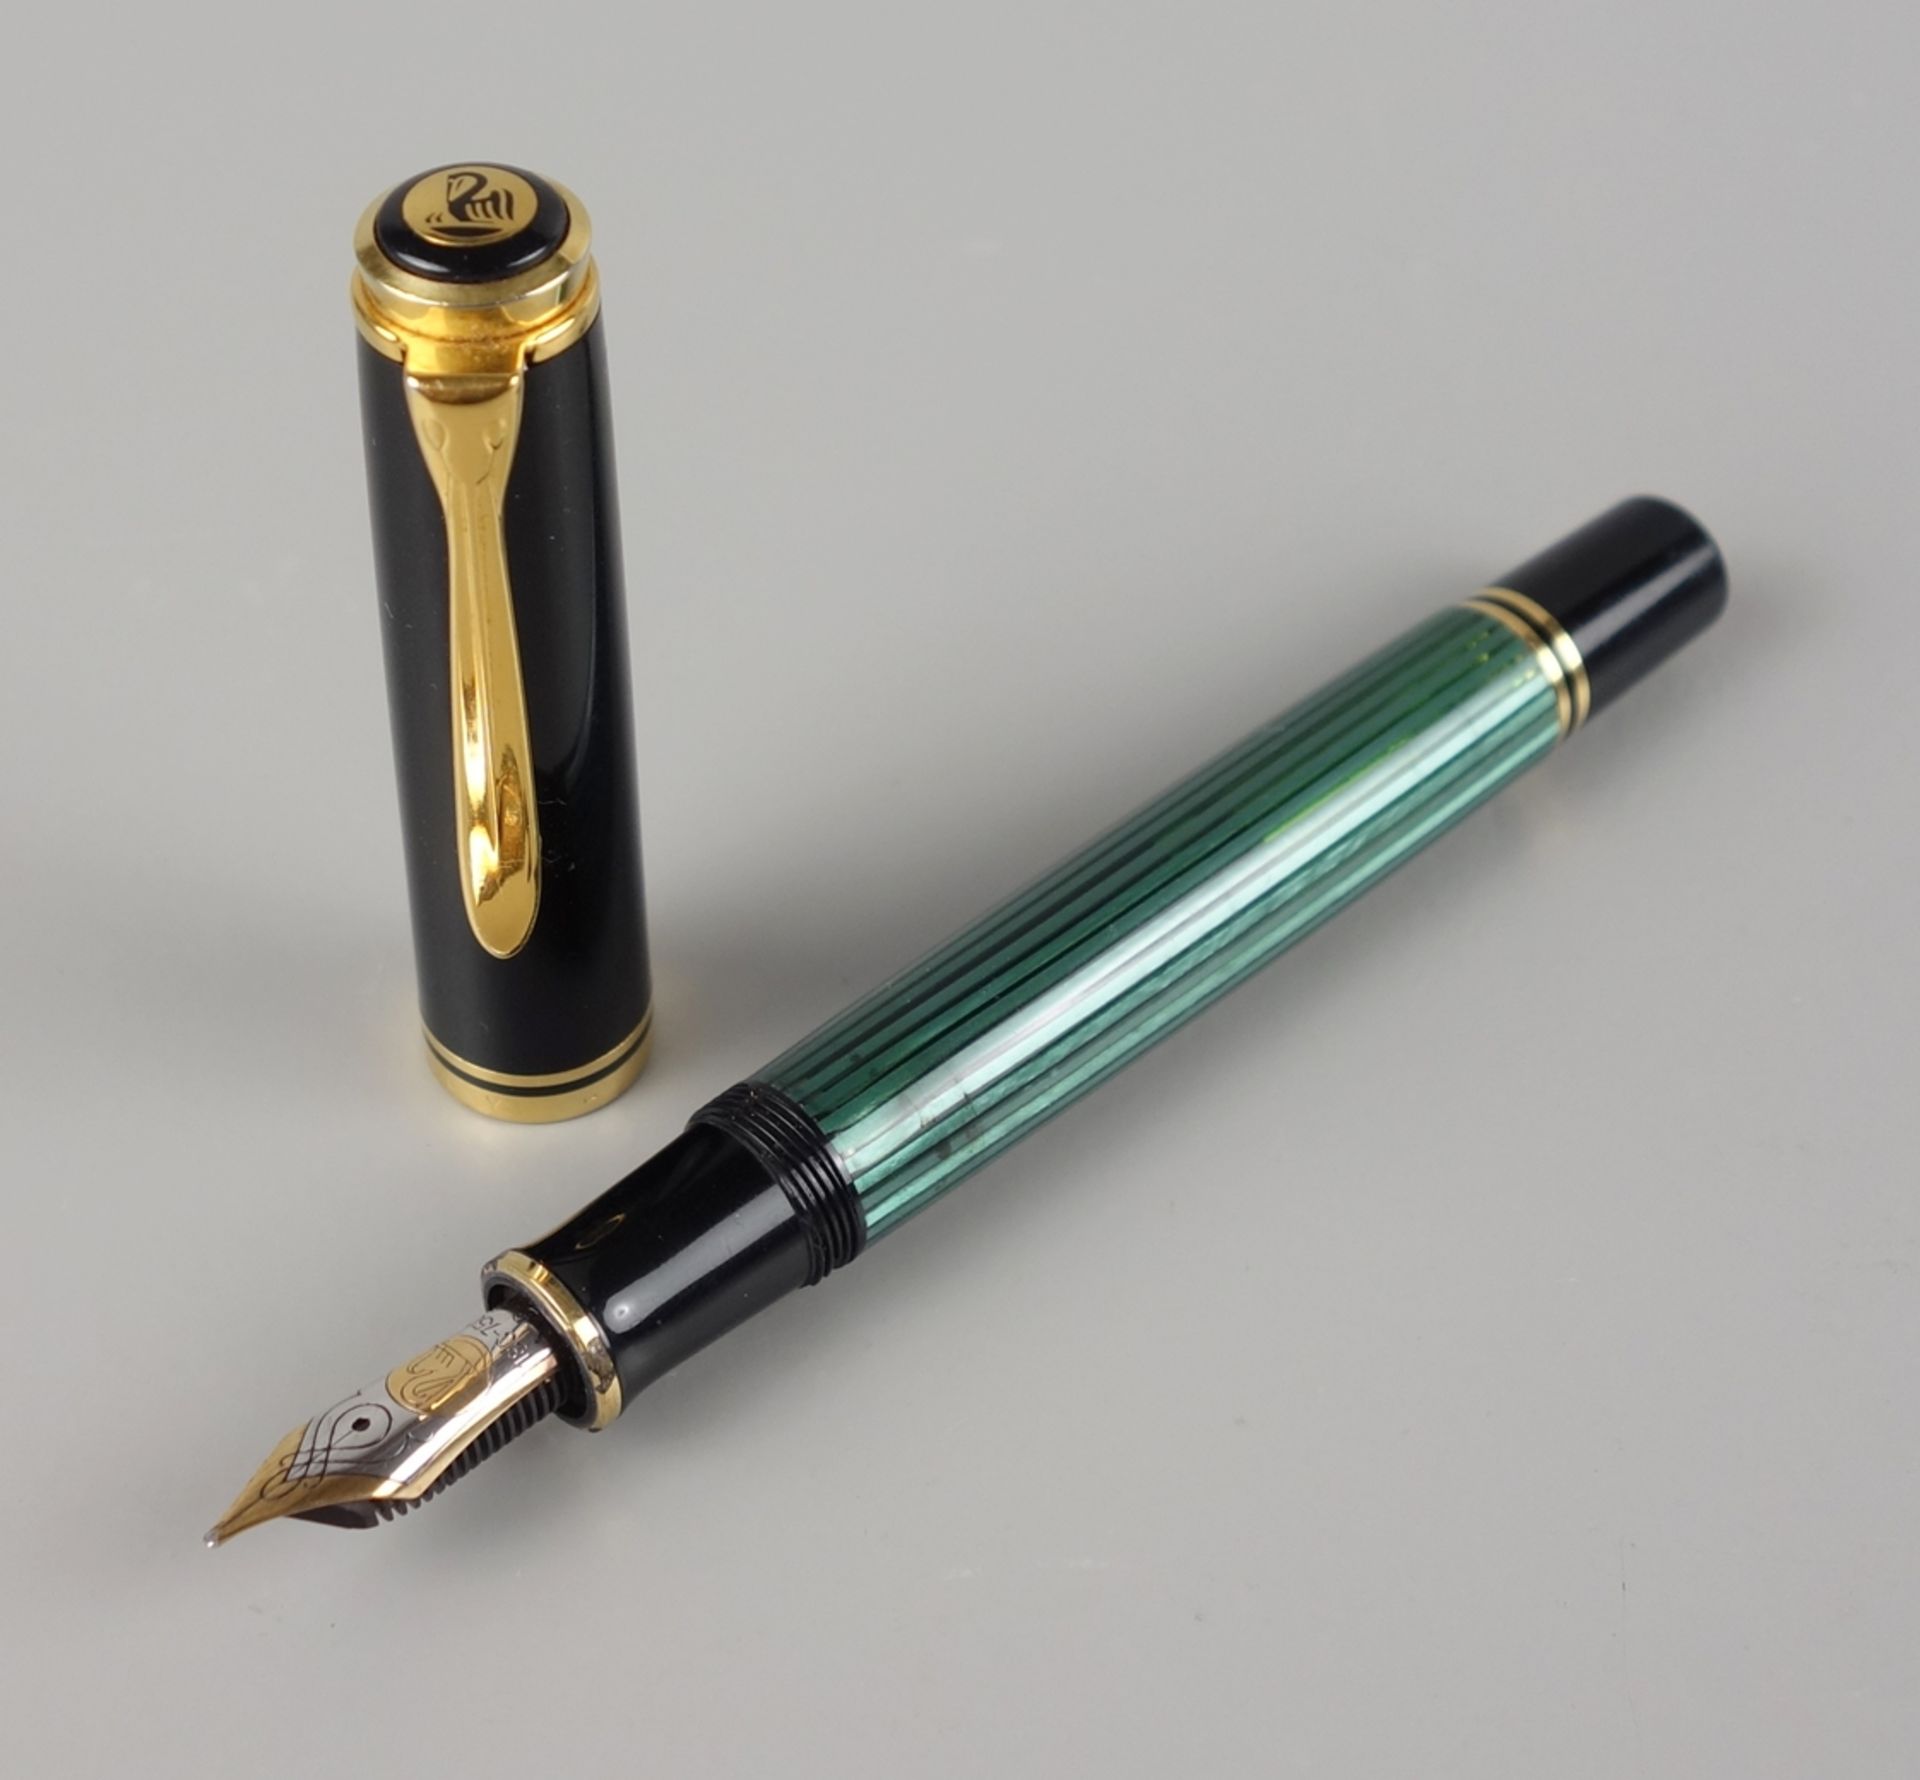 Pelikan Souverän piston fountain pen, M800